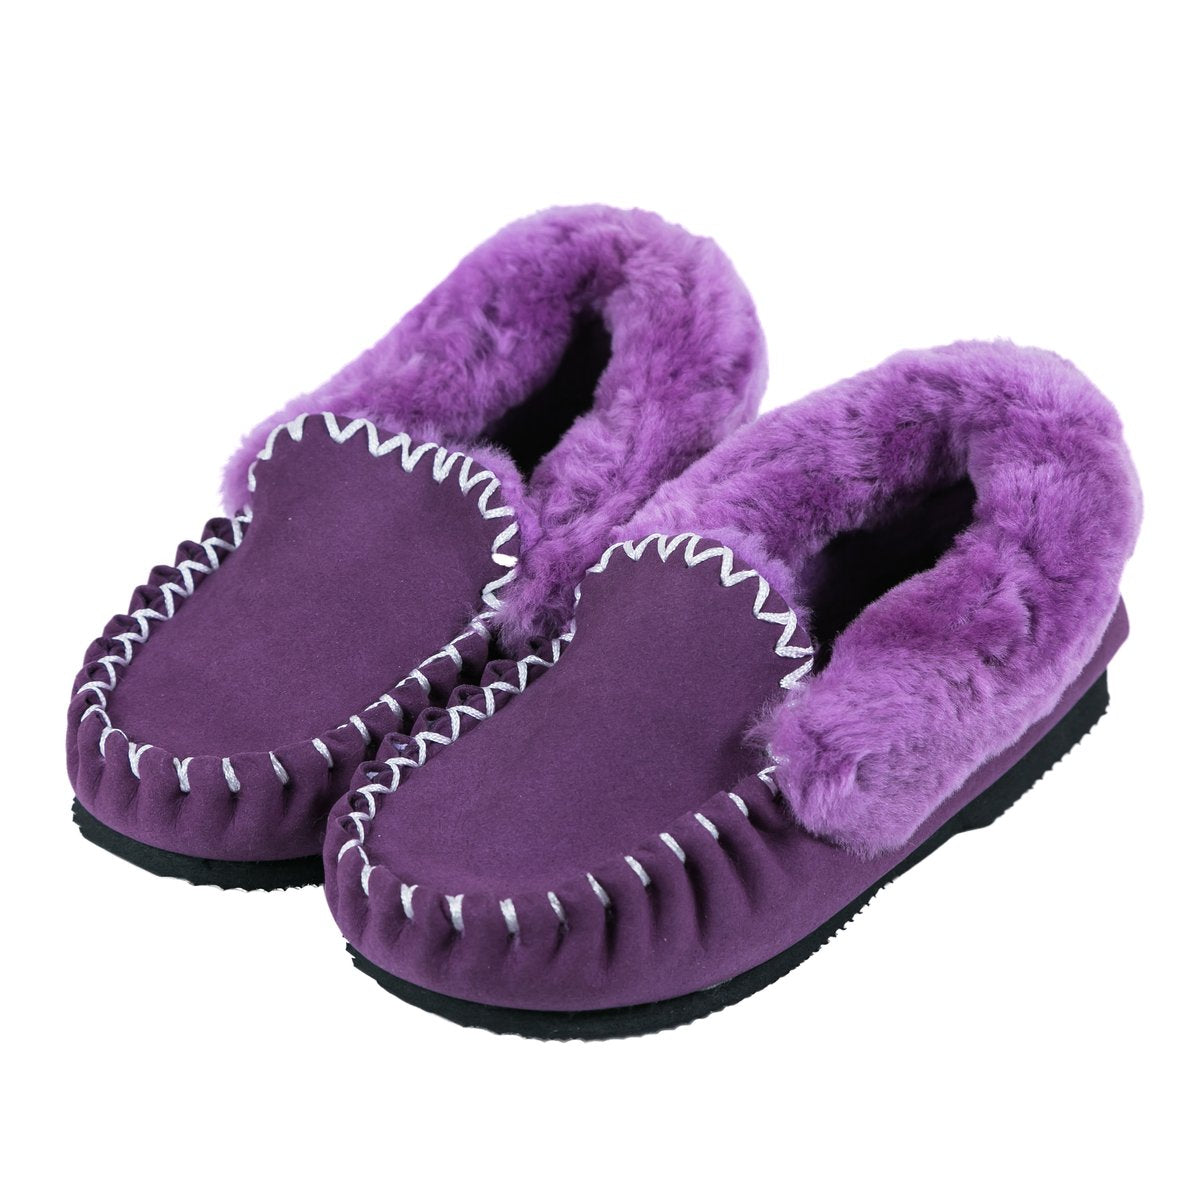 Ladies Purple Sheepskin Moccasins Ugg Boots